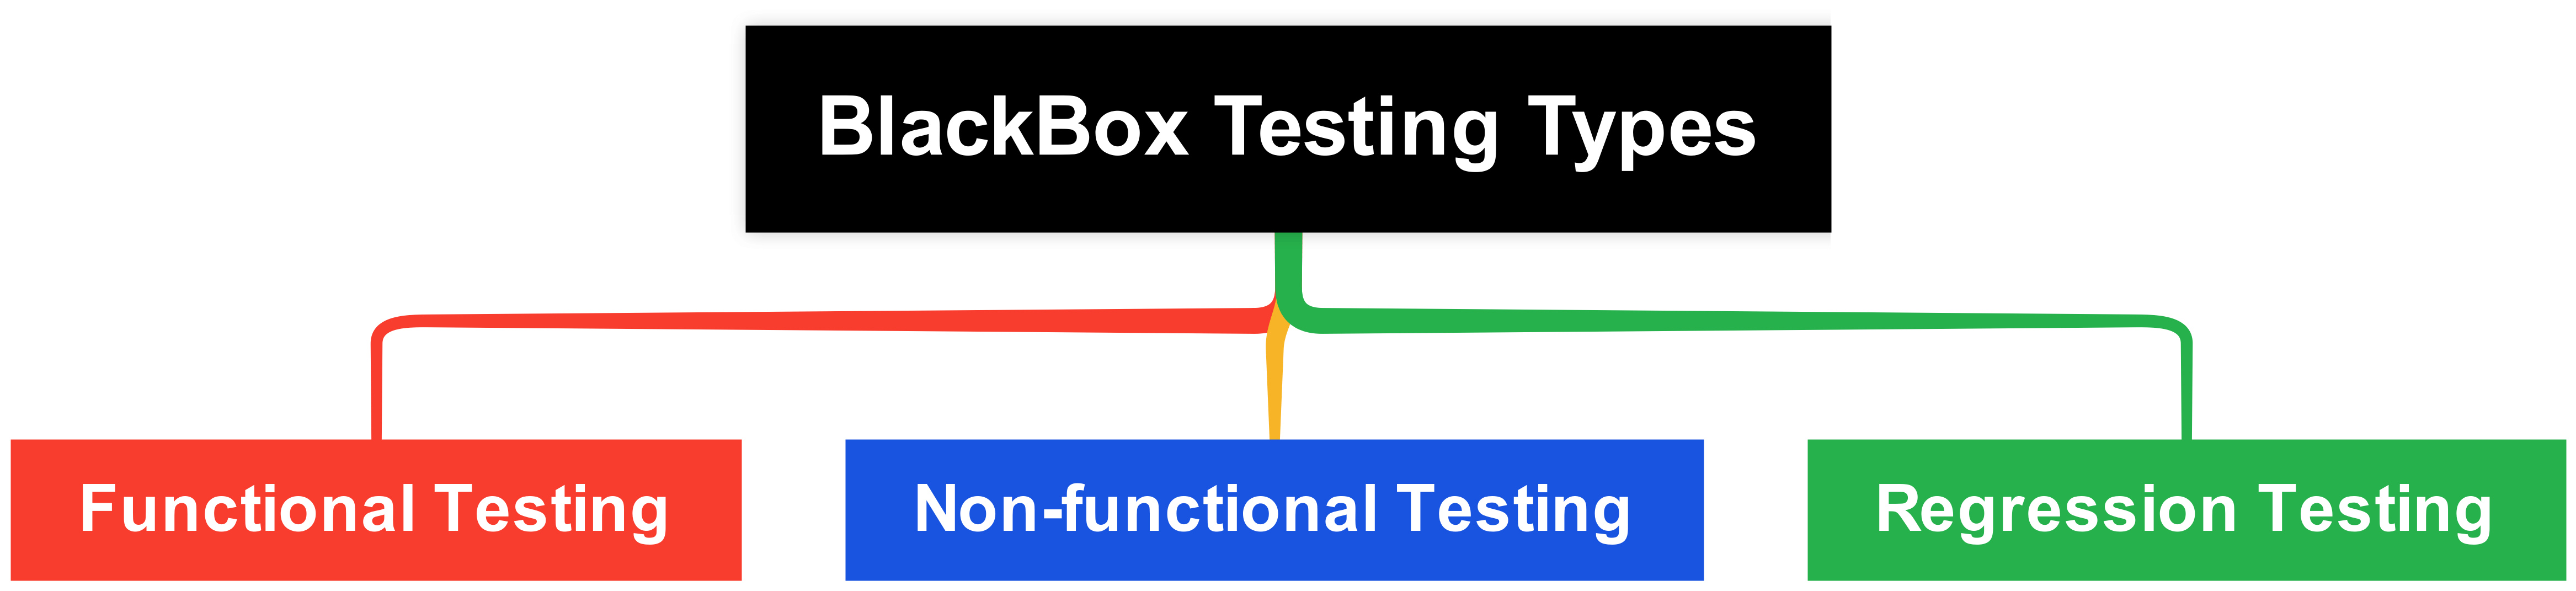 BlackBox Testing Types